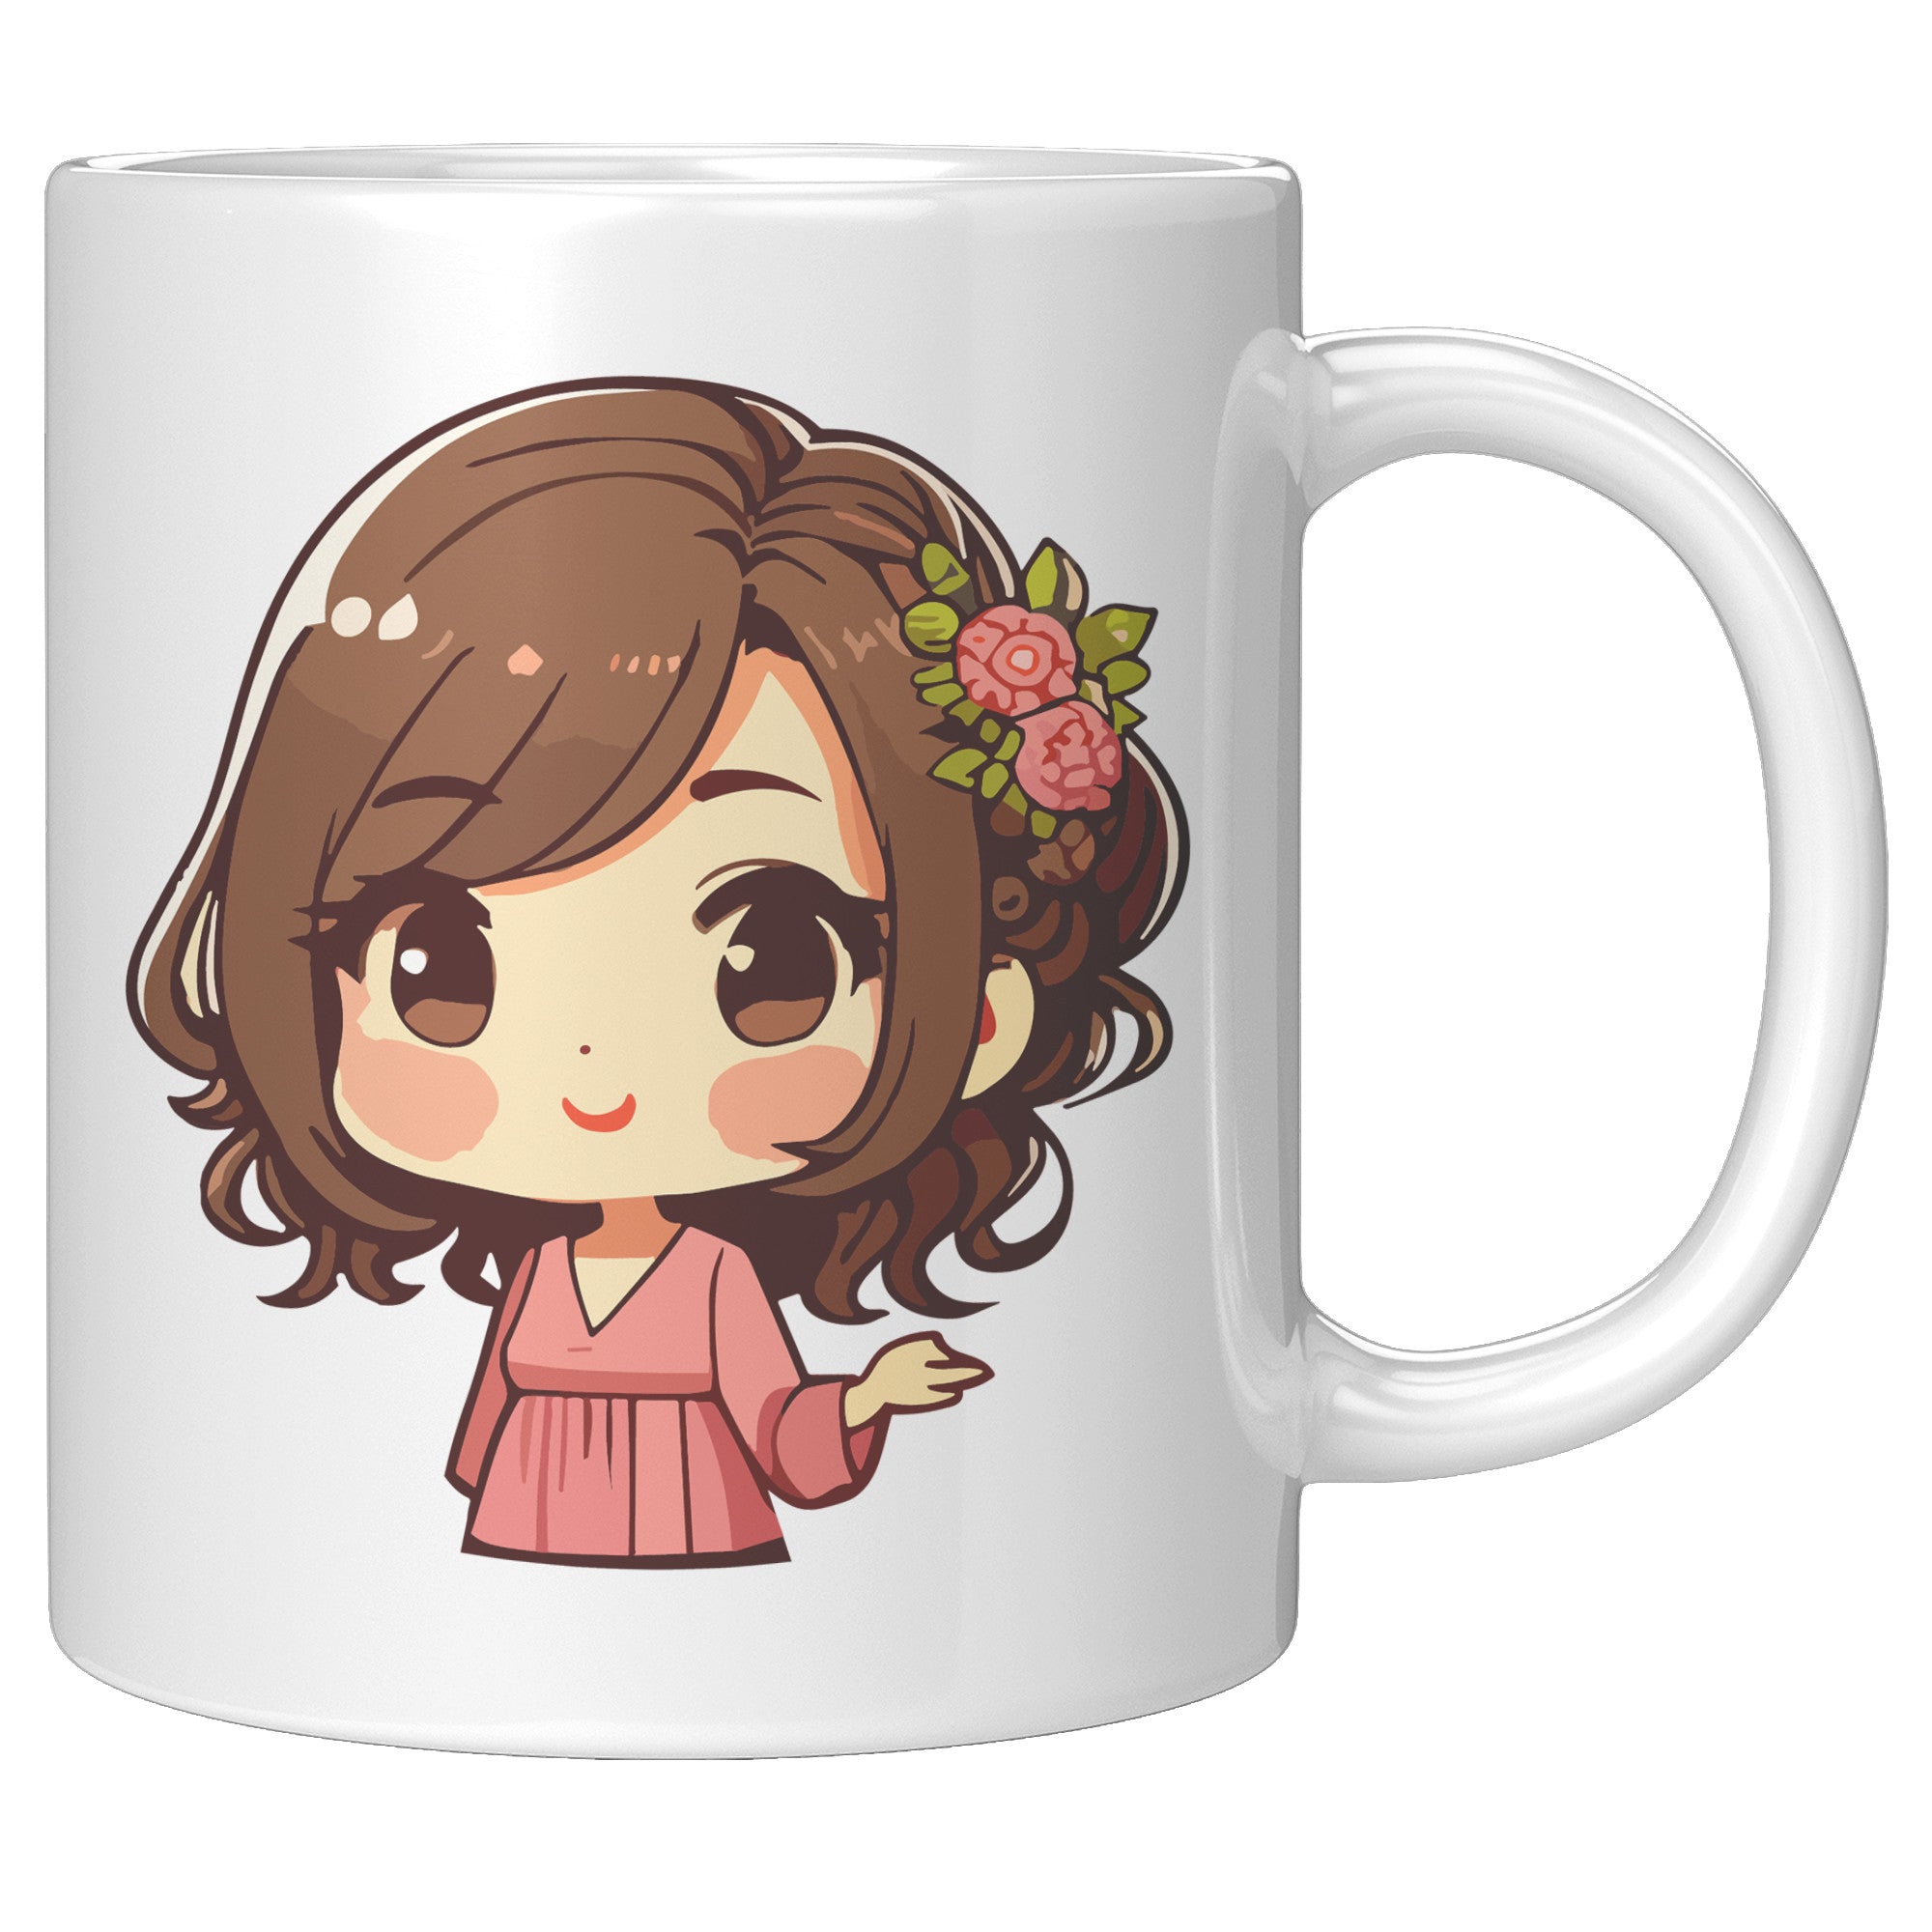 "Marites Gossip Queen Coffee Mug - Cute Cartoon 'Ano Ang Latest?' Cup - Perfect Chismosa Gift - Filipino Slang Tea Mug" - EE